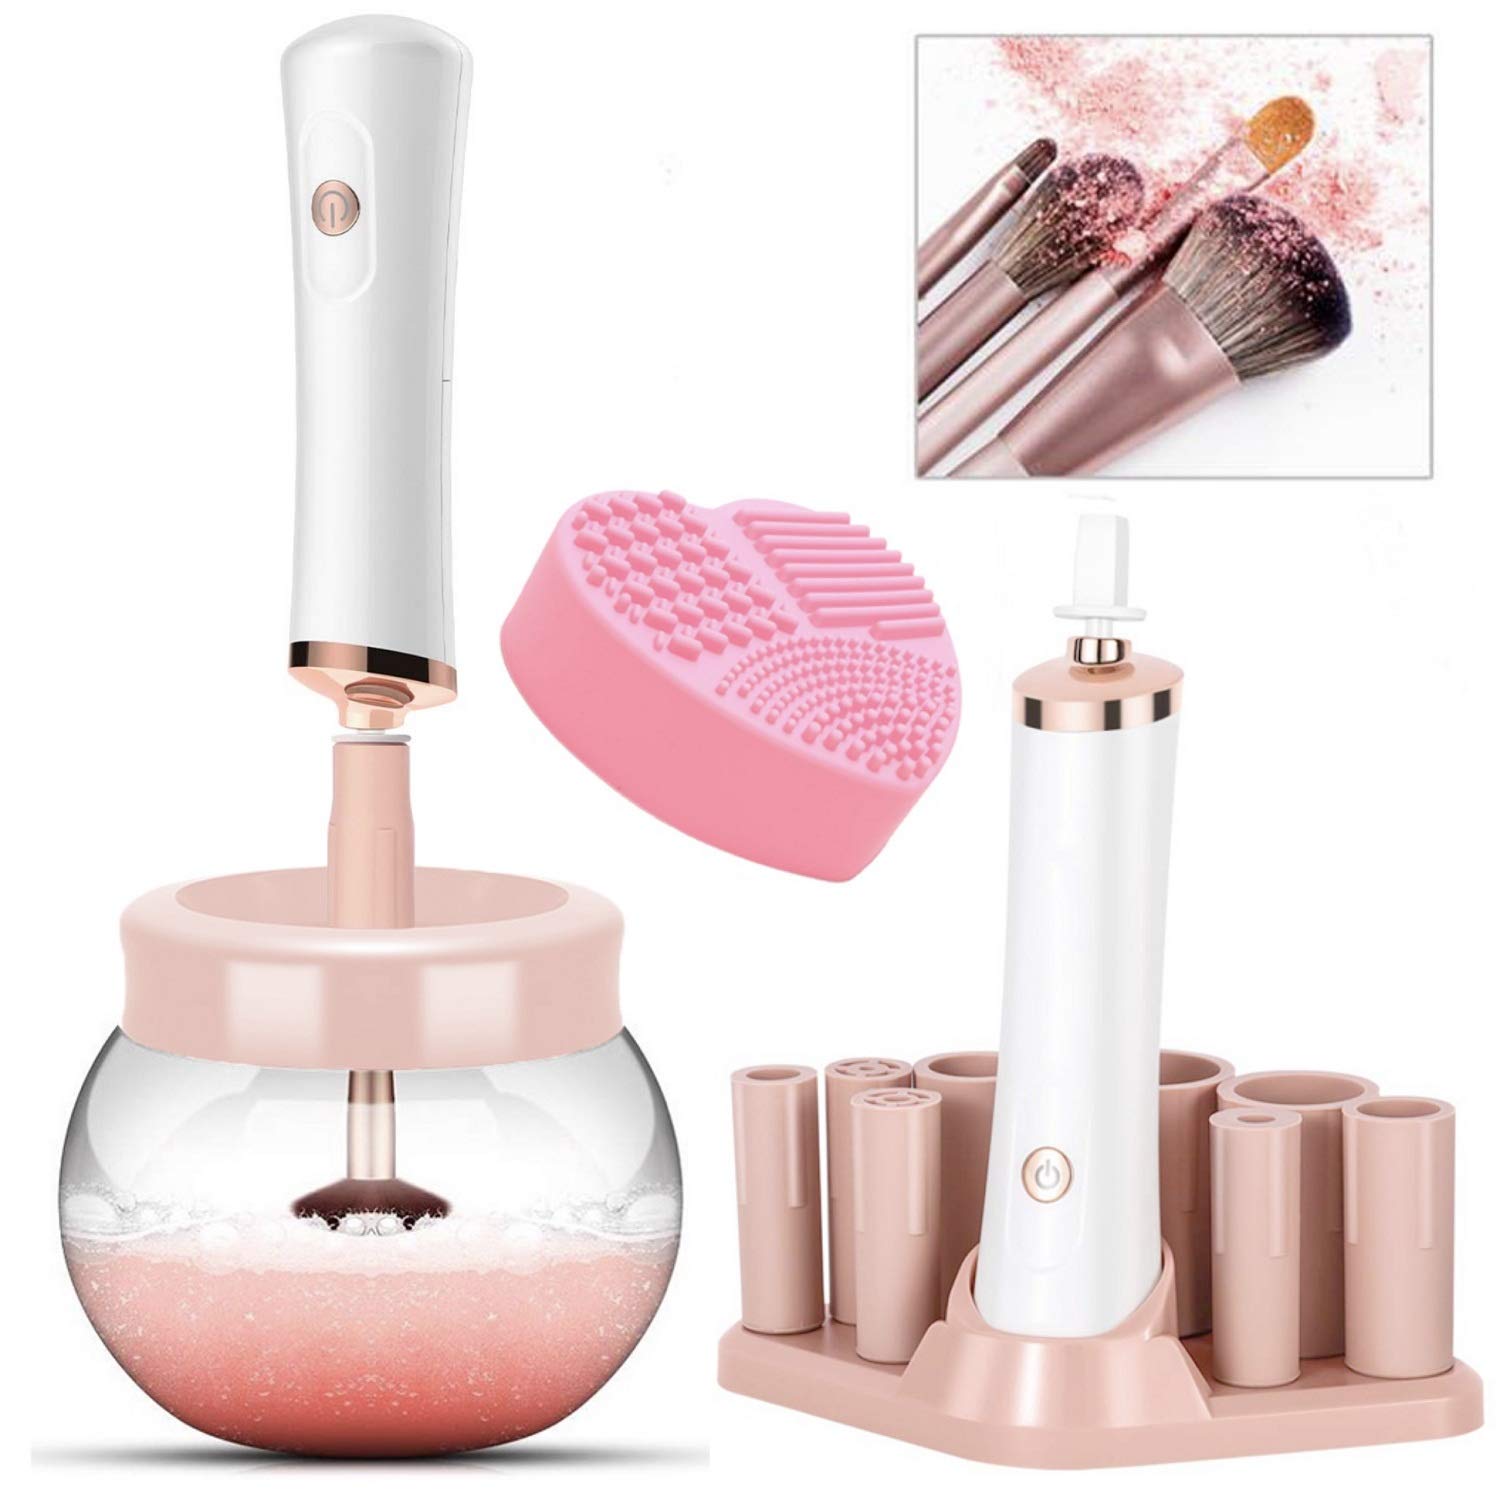 Makeup Brush Cleaner and Dryer Machine, YOYEWA Electric Cosmetic